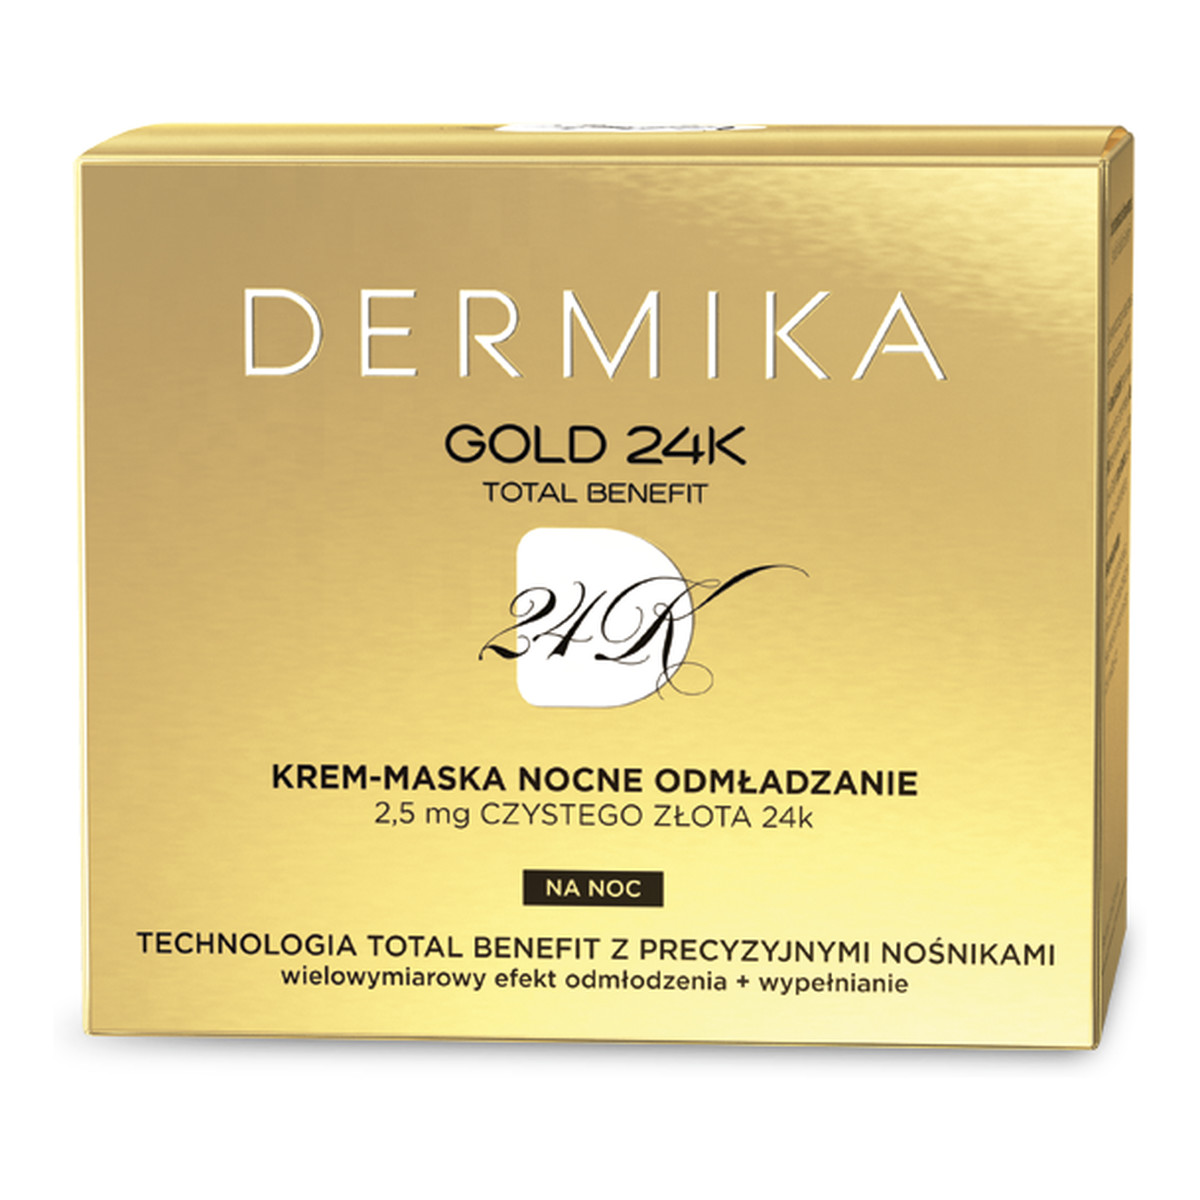 Dermika Gold 24K Total Benefit Krem - Maska Nocne Odmładzanie 50ml